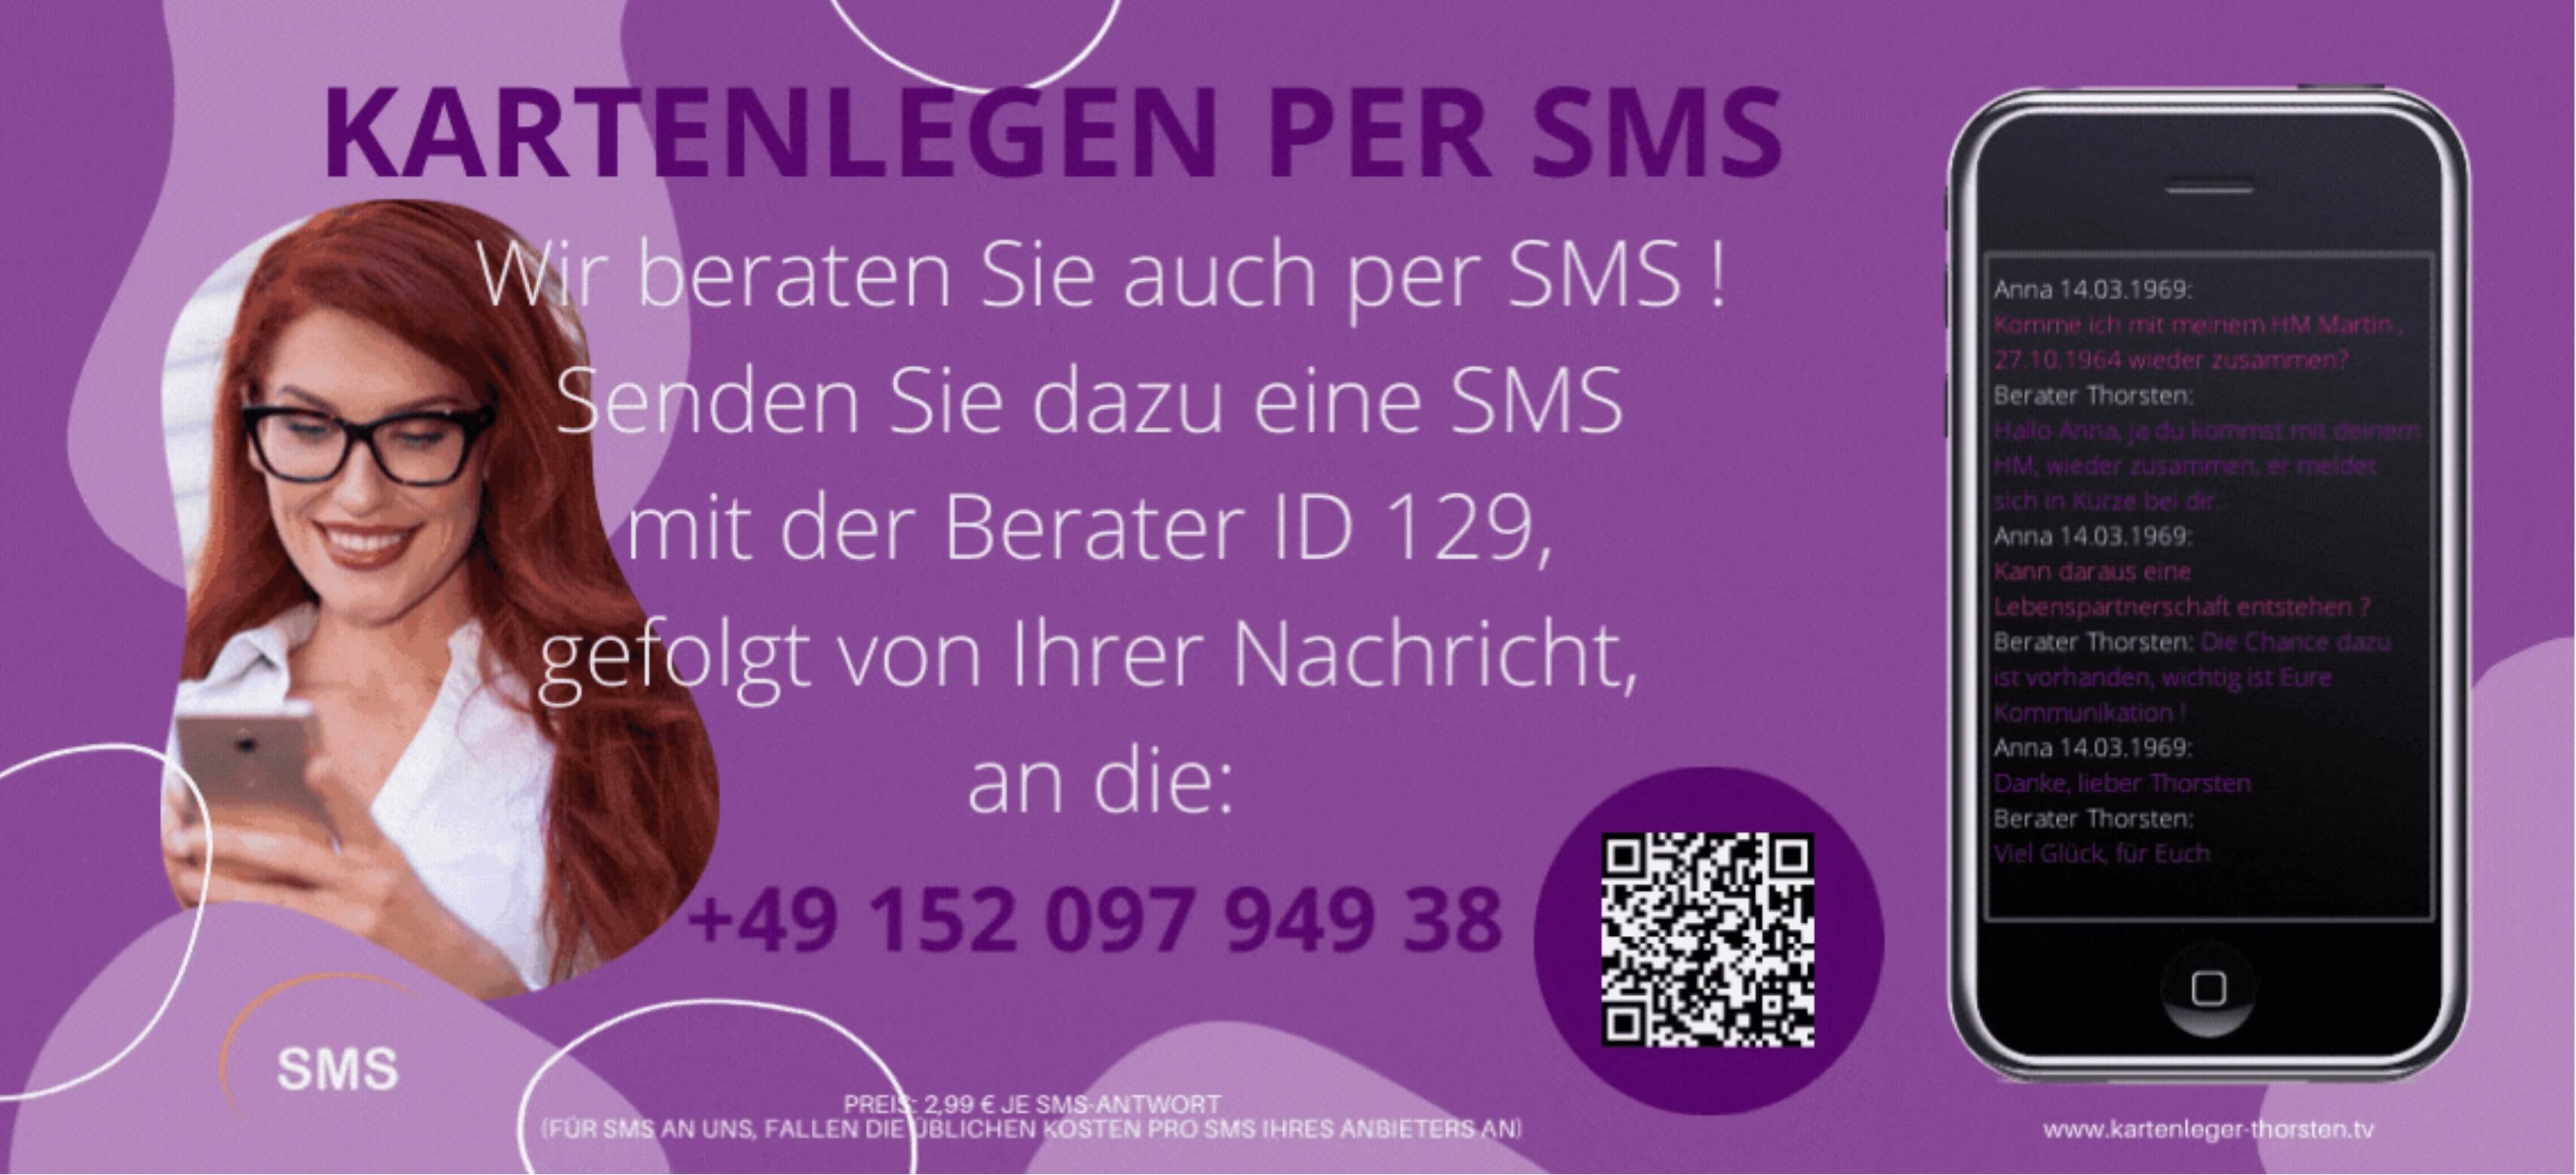 Kartenlegen per SMS